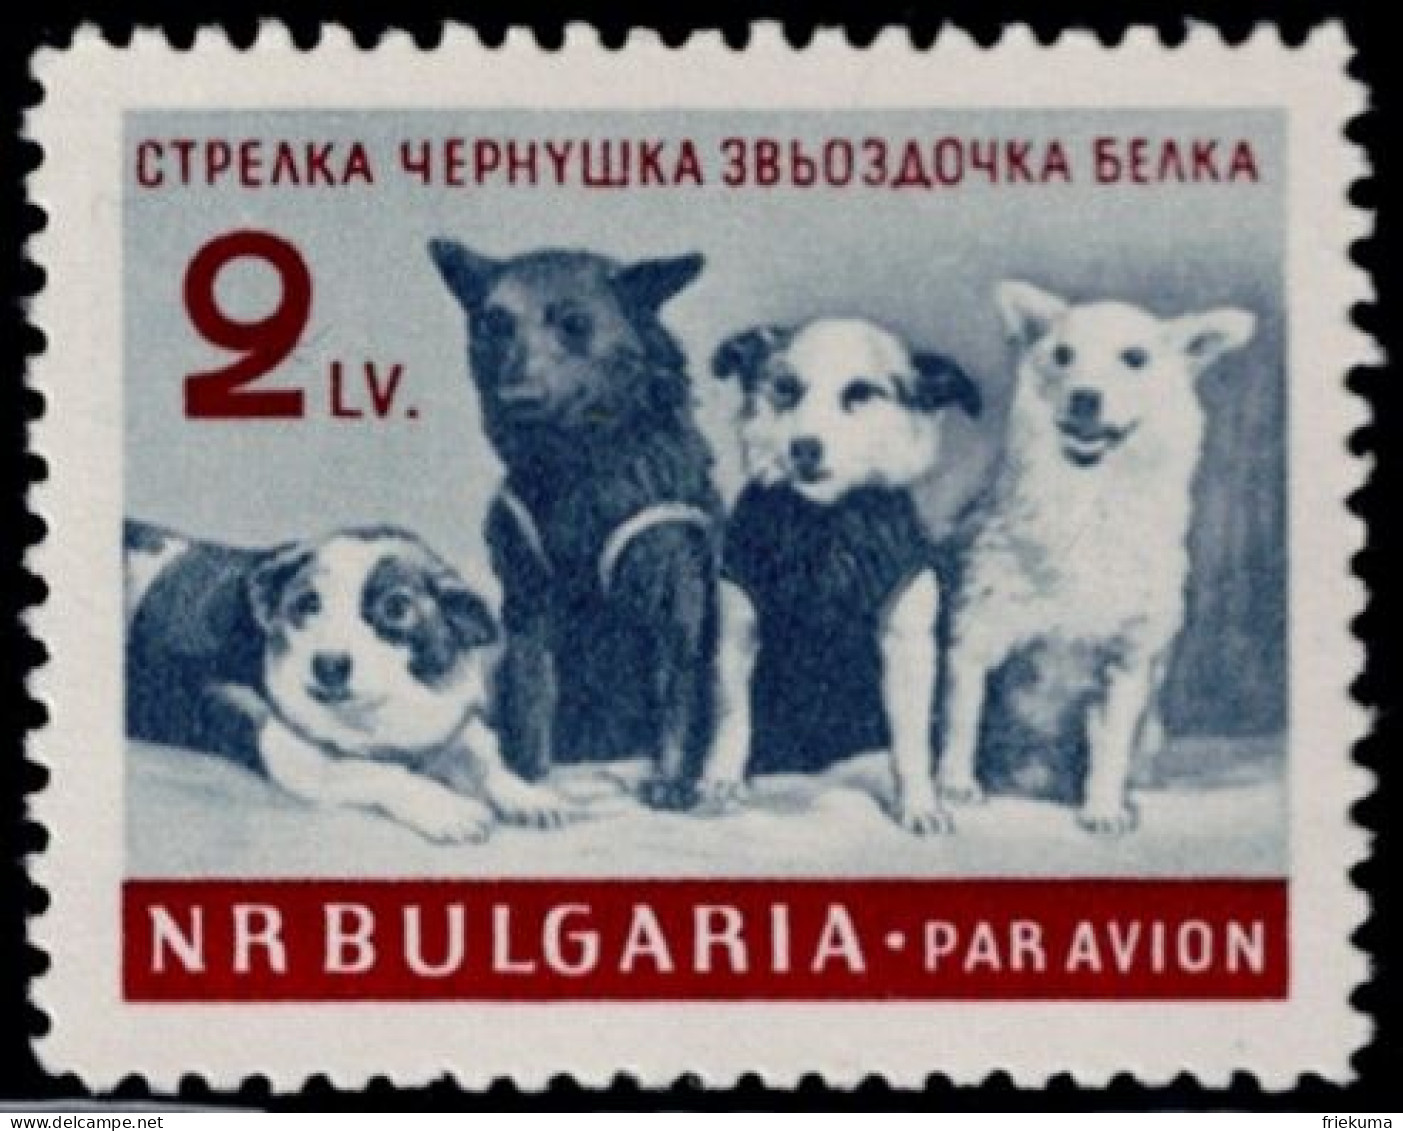 Bulgaria 1961, Soviet Cosmonaut Dogs: Cosmonaut Dogs "Strelka", "Chernushka", "Tsvdochka" And "Belka", MiNr. 1249 - Perros